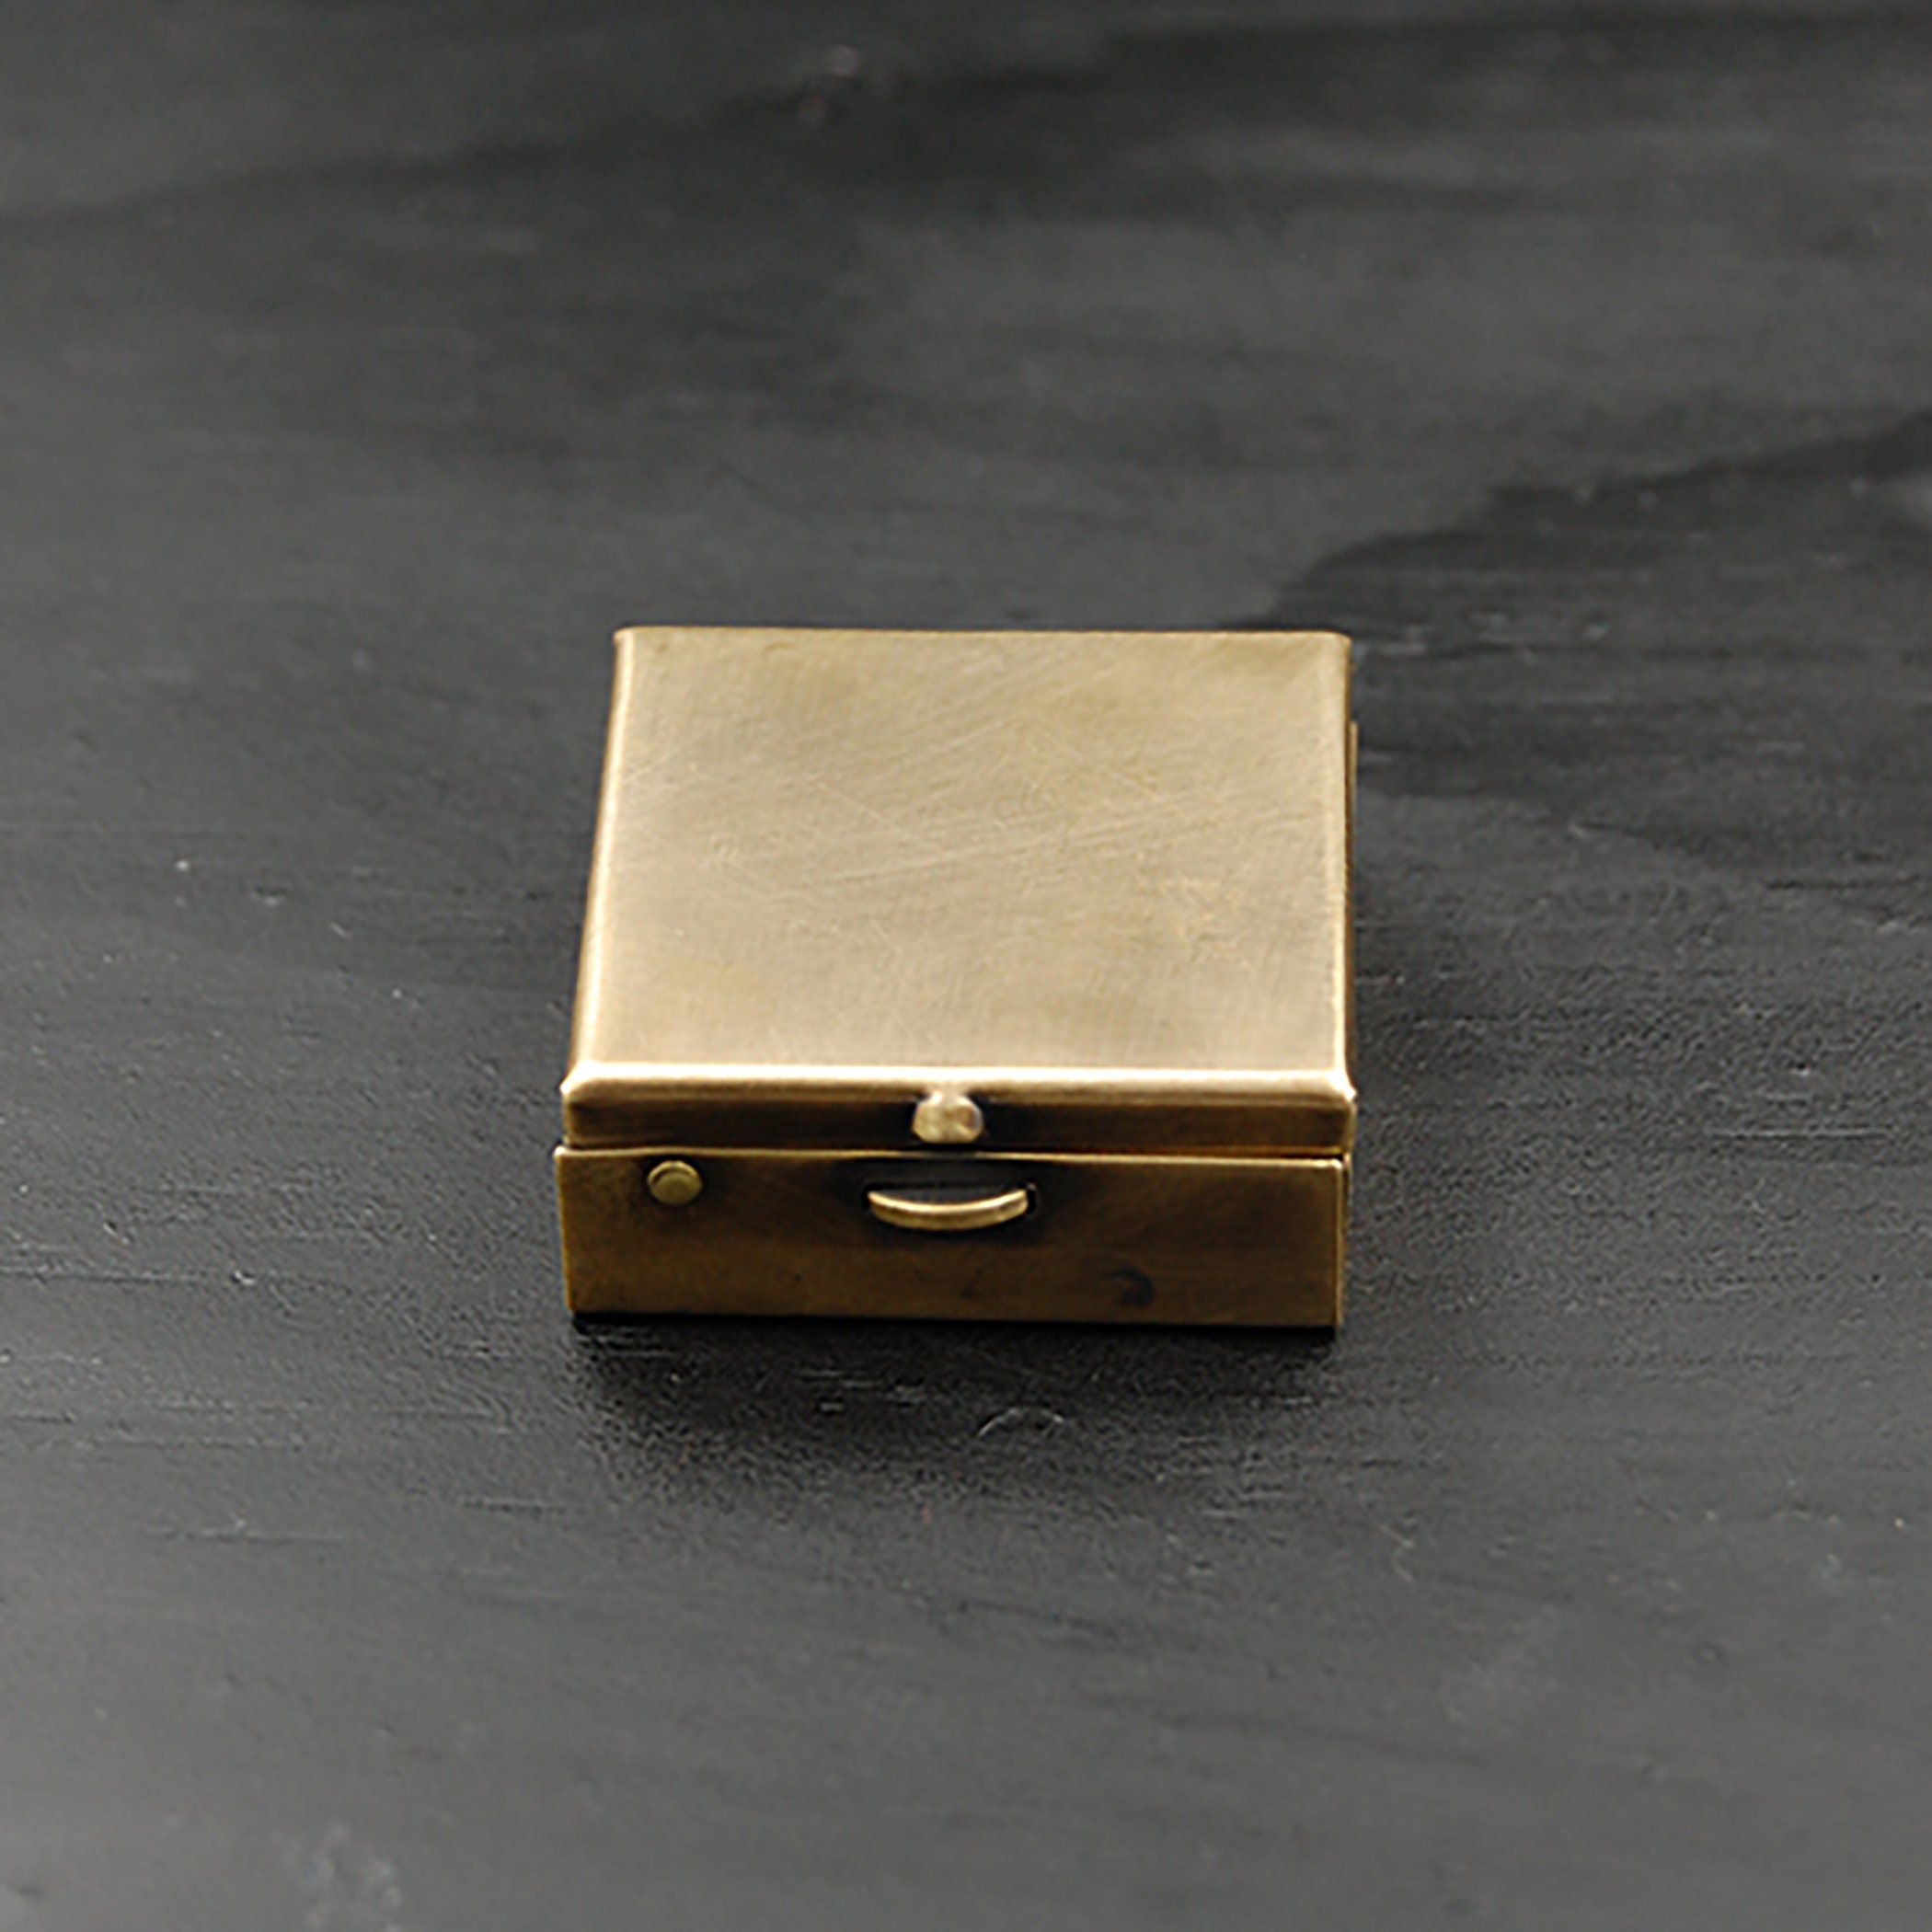 Custom Printed Metal Pill Box Personalised Metal Tablet 